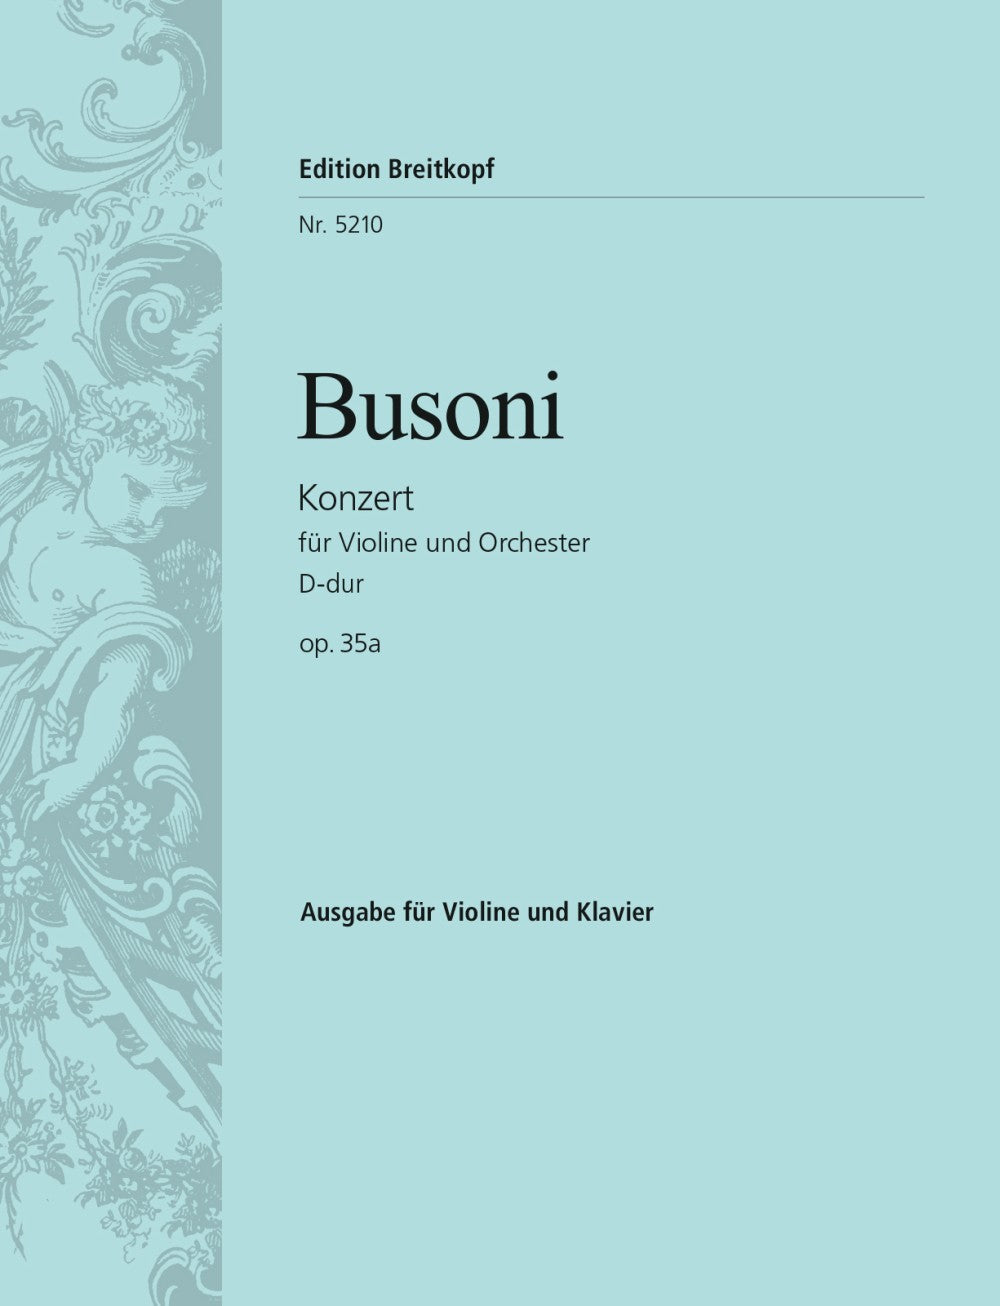 Busoni: Violin Concerto in D Major, BV 243, Op. 35a